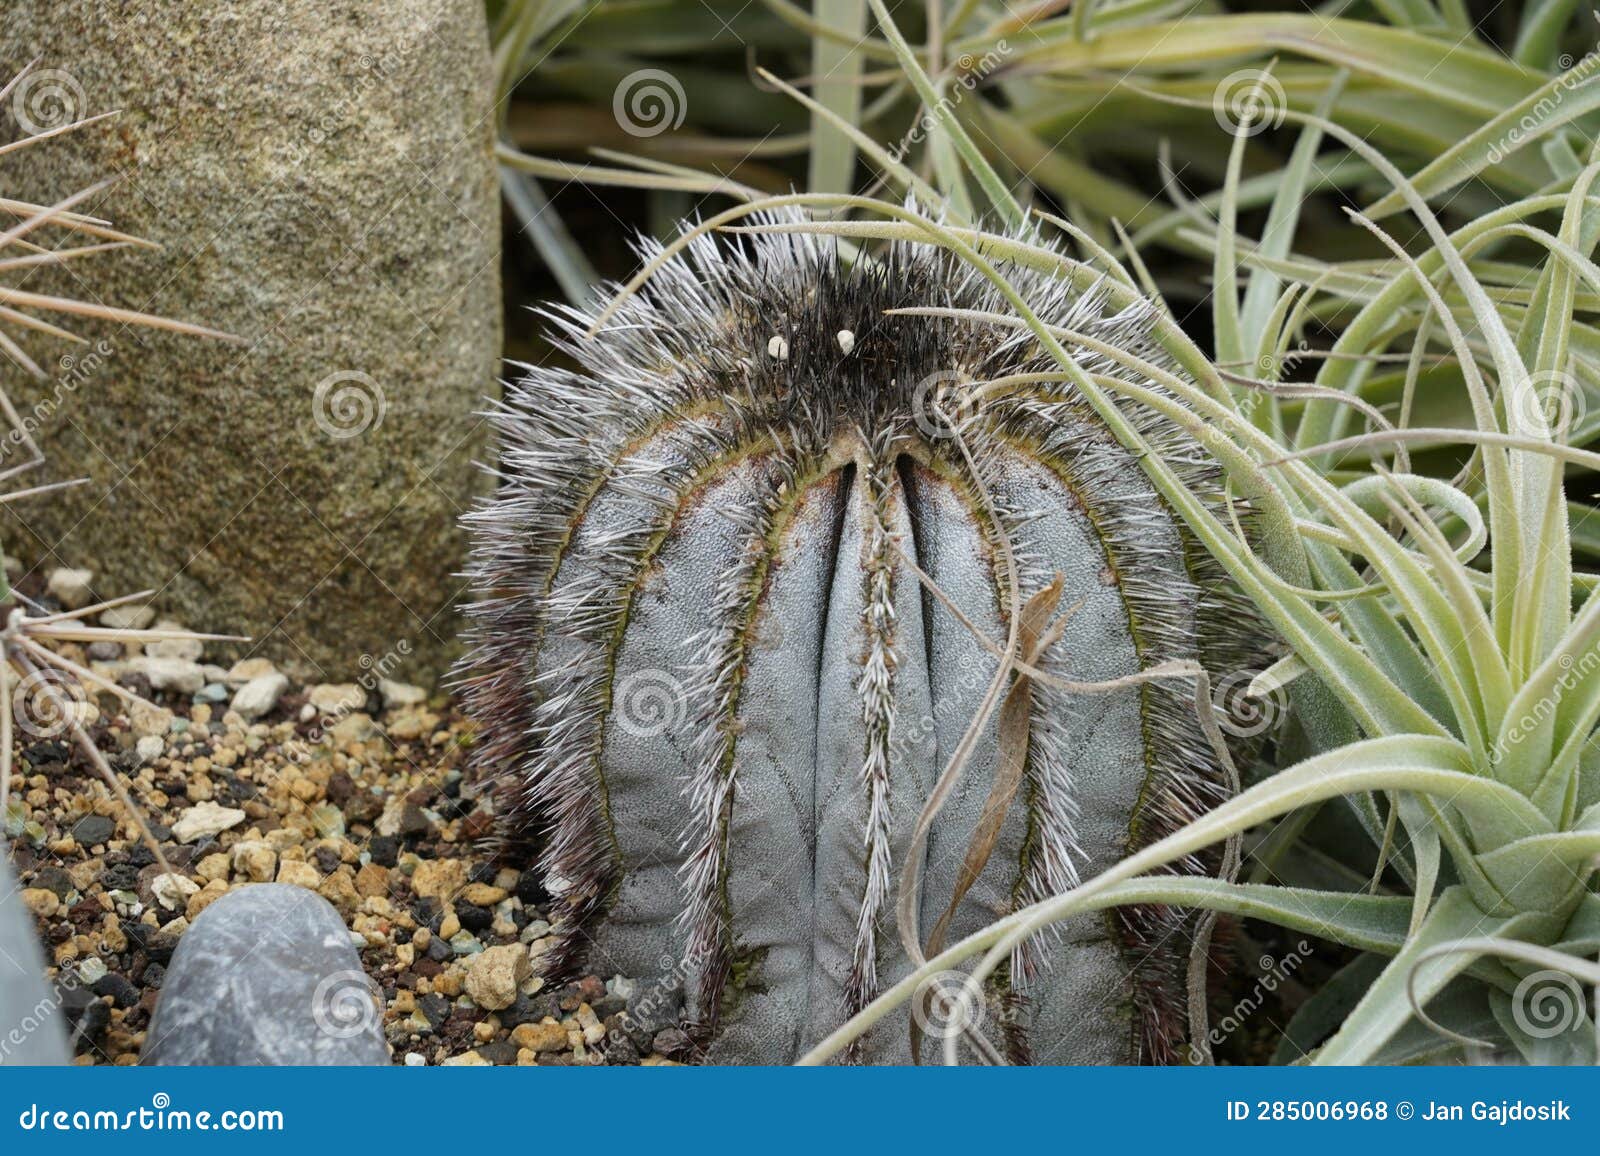 cactus in latin called uebelmannia pectinifera growing in a botanical garden.